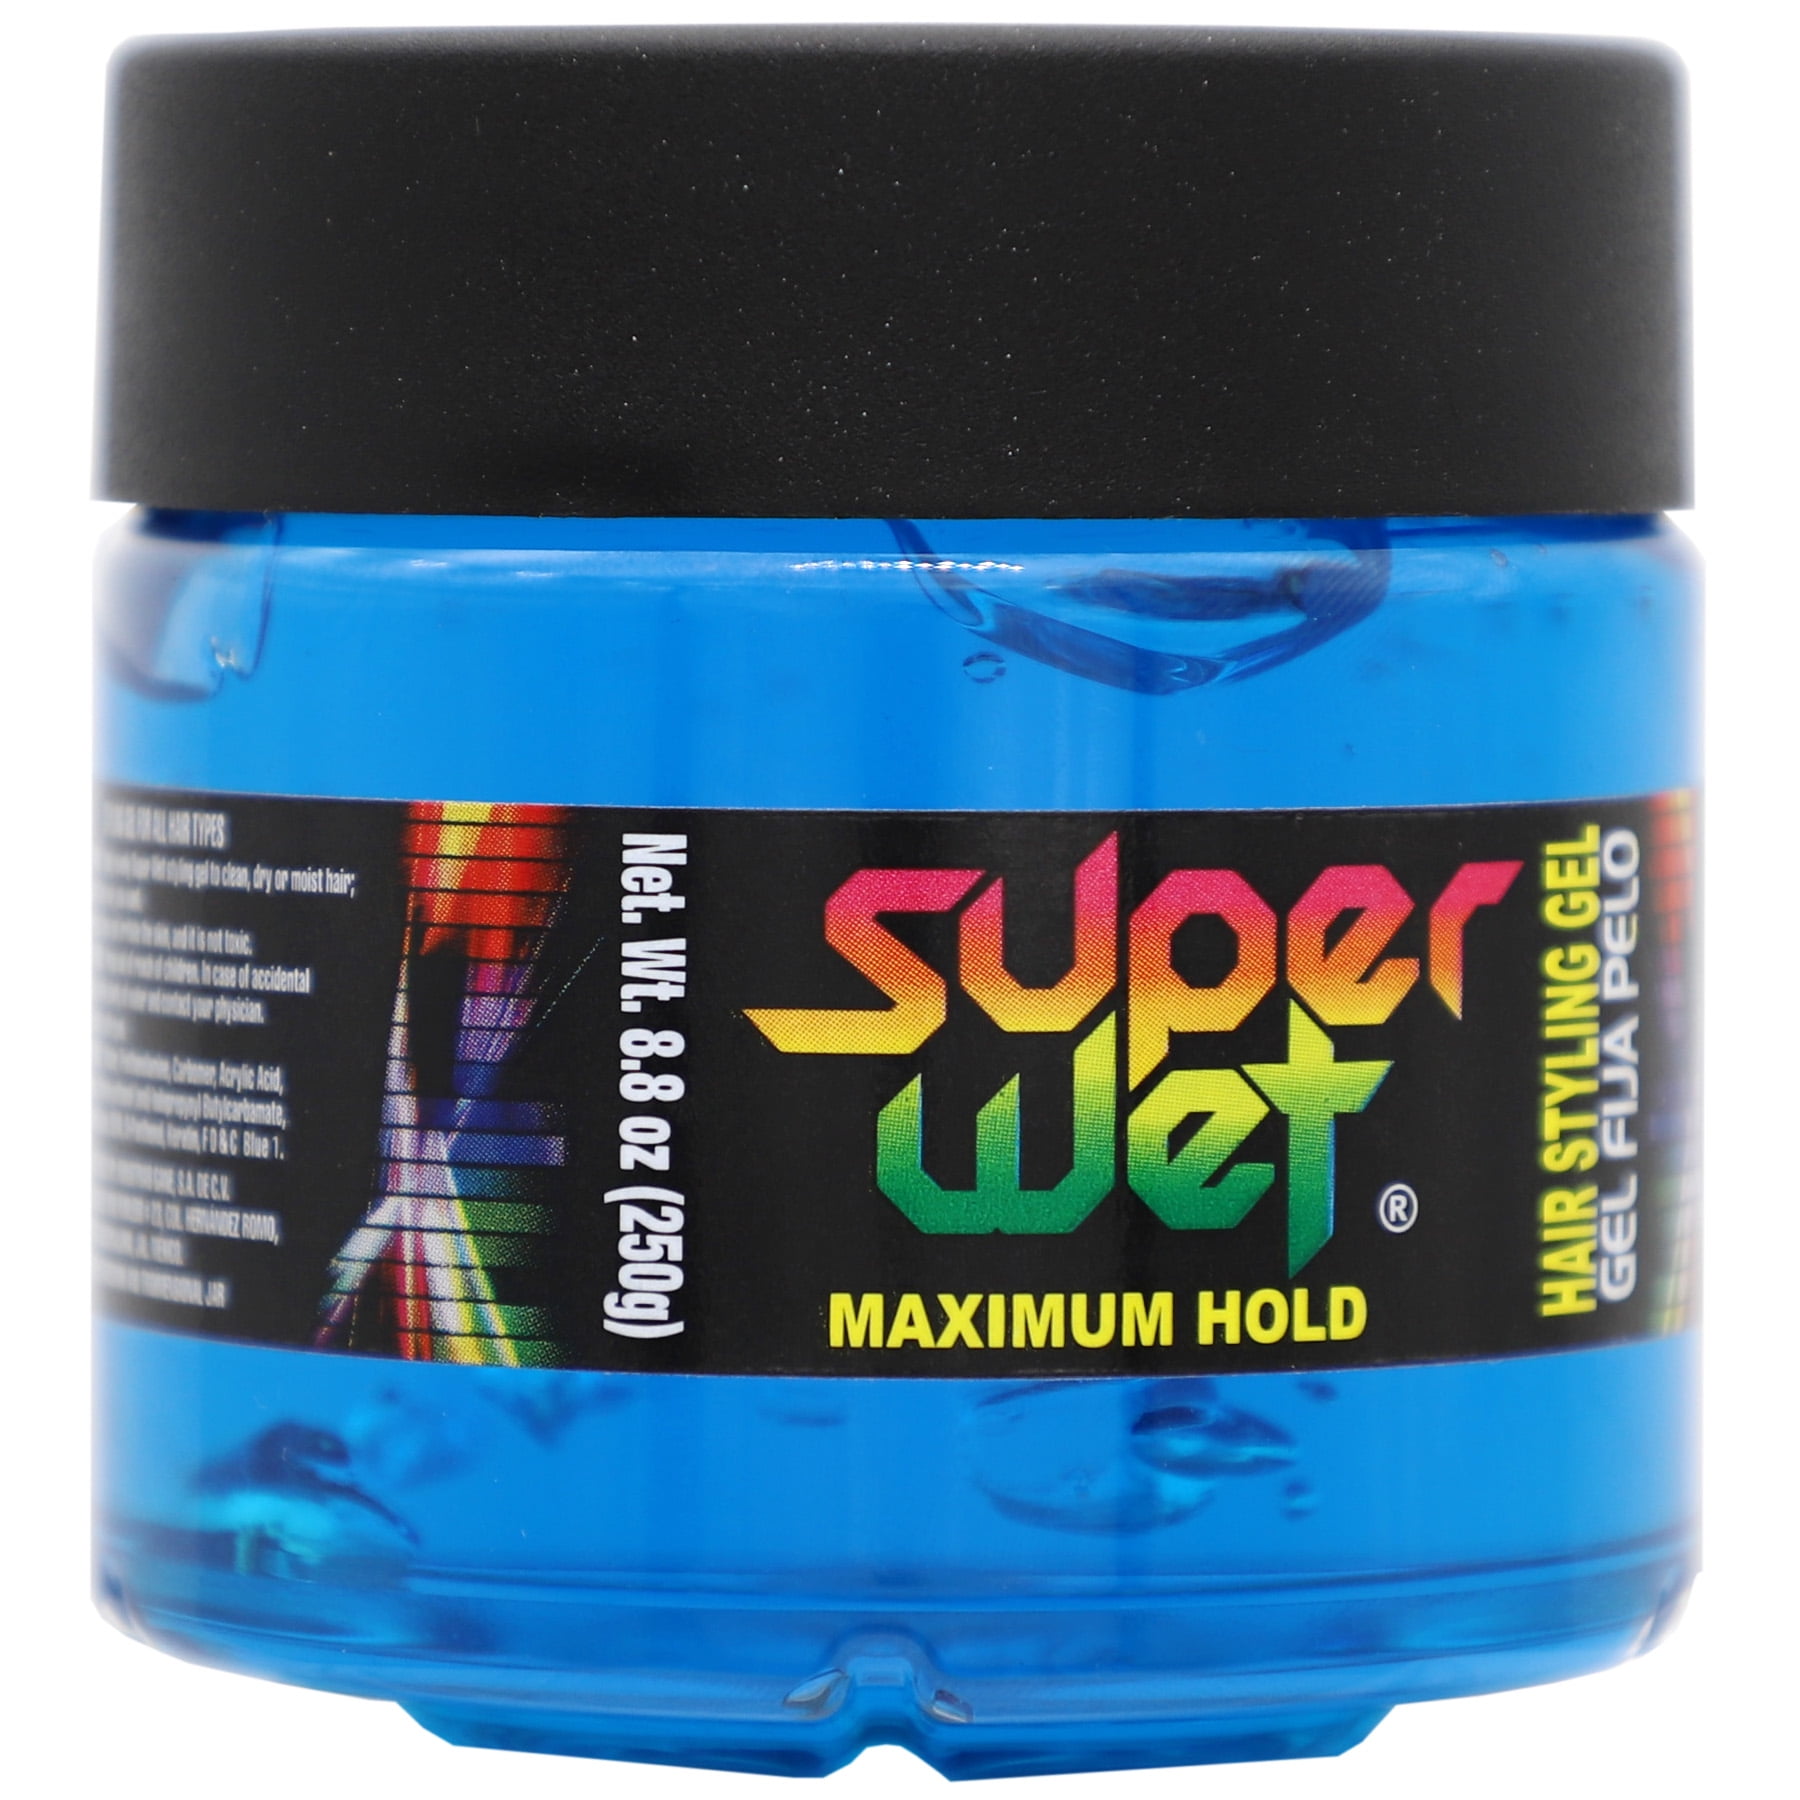 Super Wet Azul Nourishing Hair Styling Gel, Maximum Control, Unisex, 8.8 oz  Jar